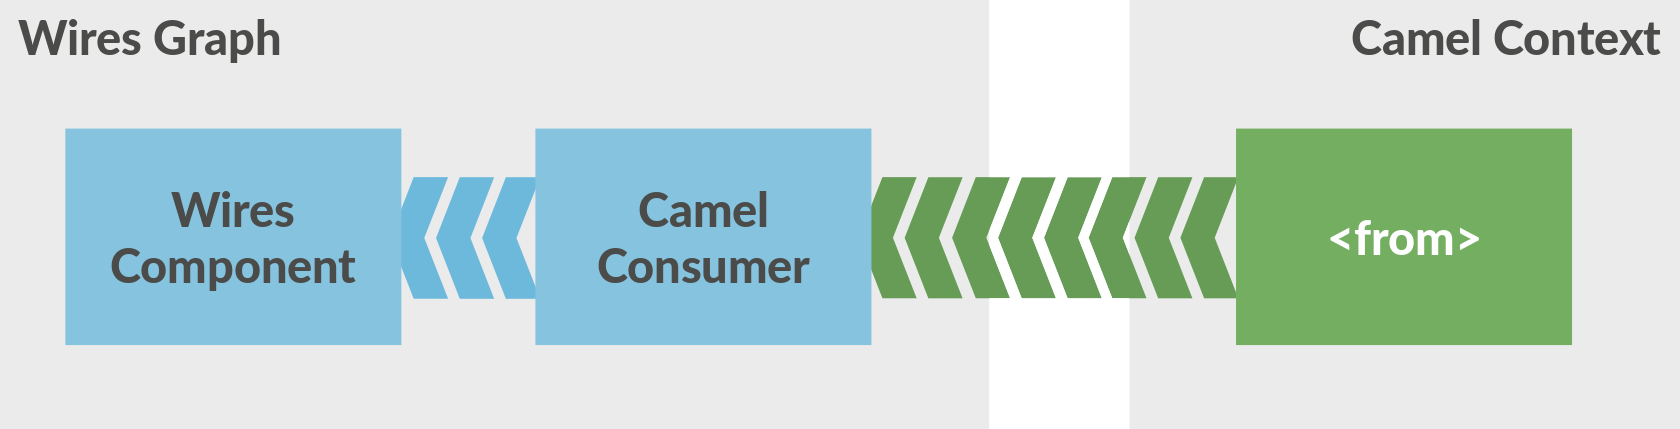 Apache Camel consumer node in Kura Wires